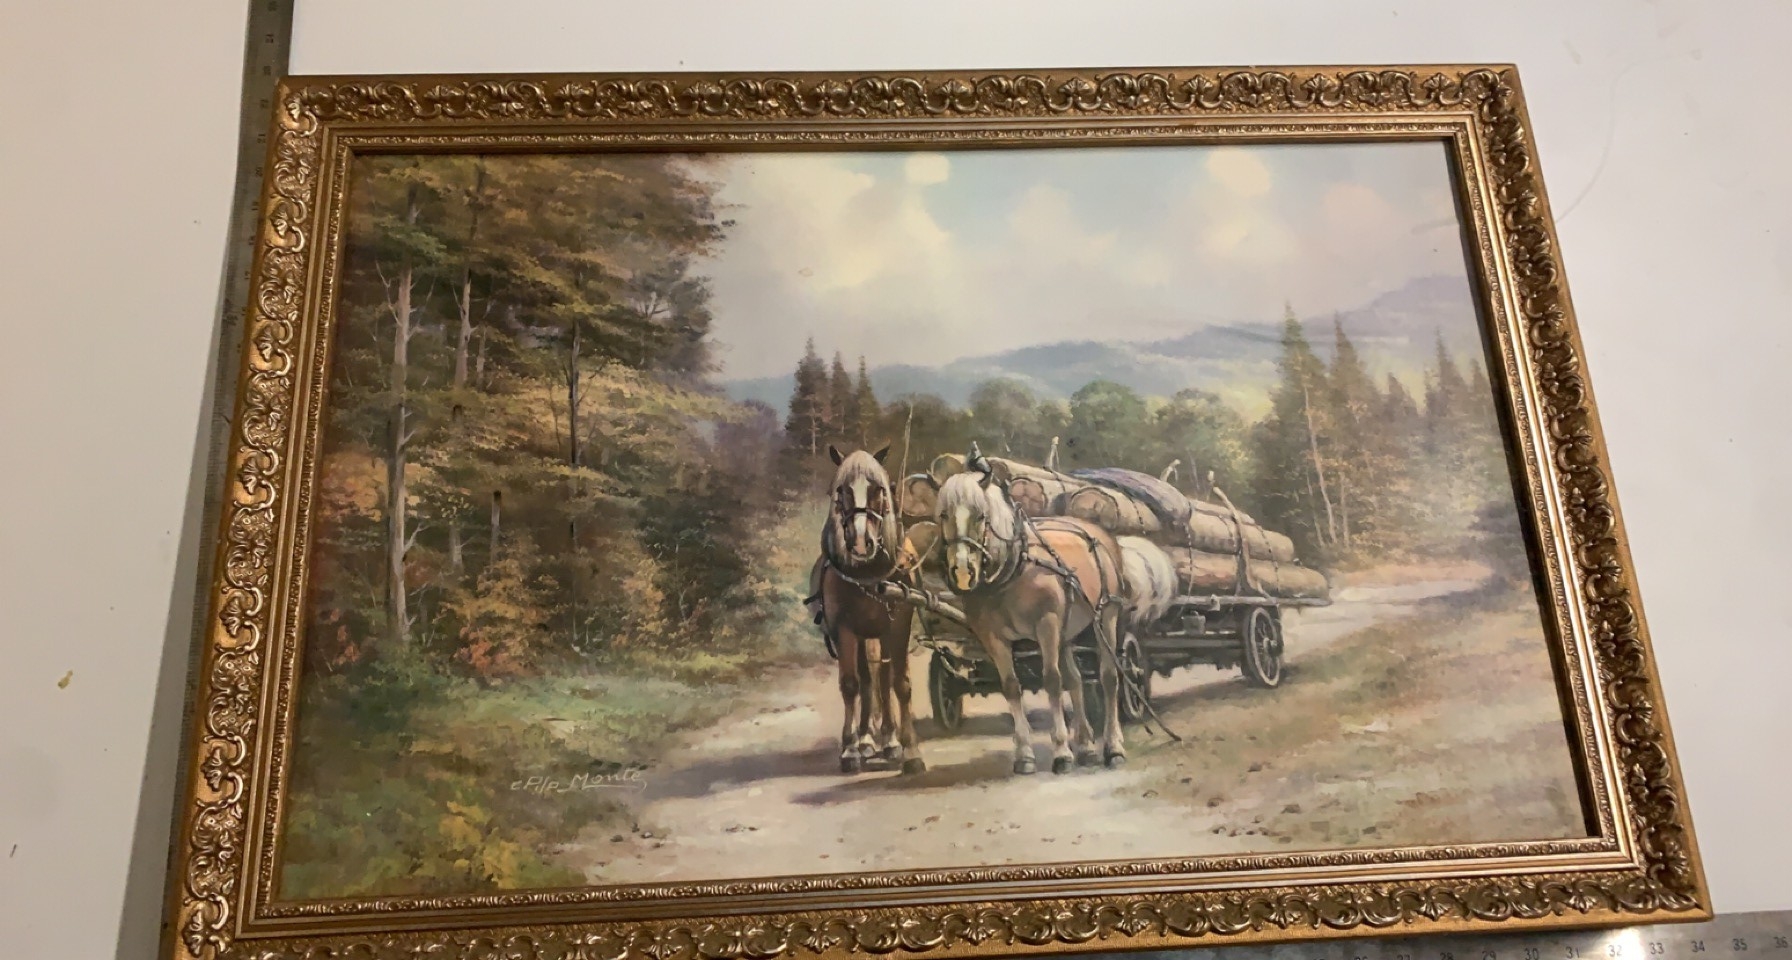 Framed print of working horses